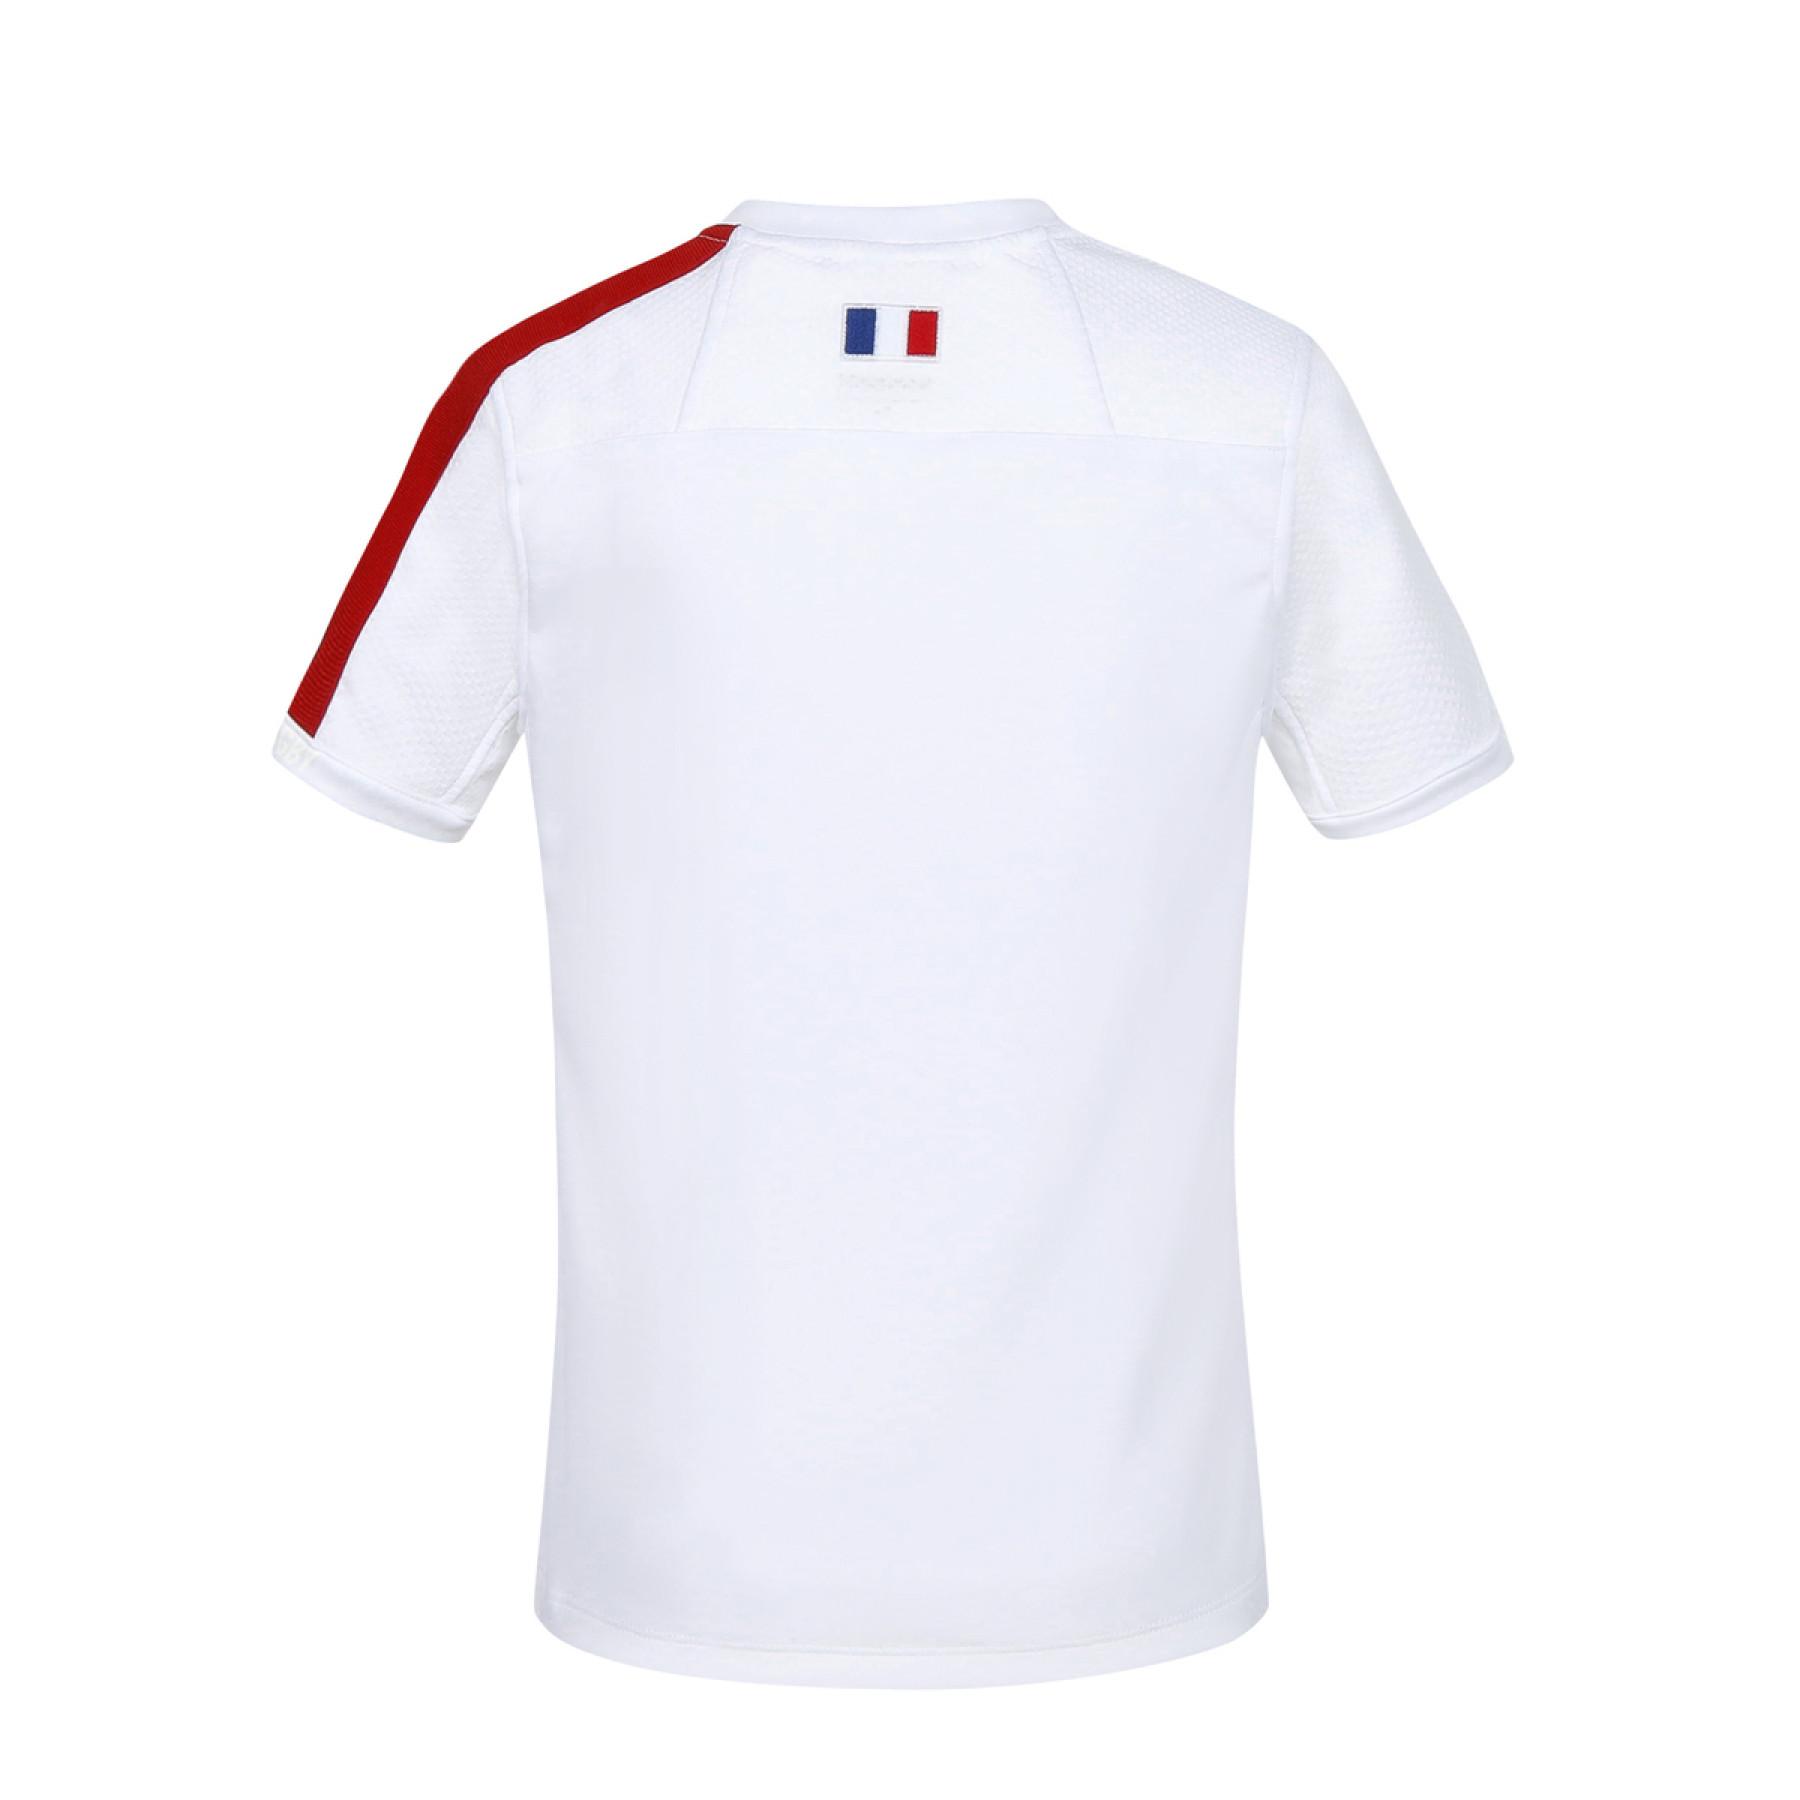 Camiseta infantil réplica xv de France